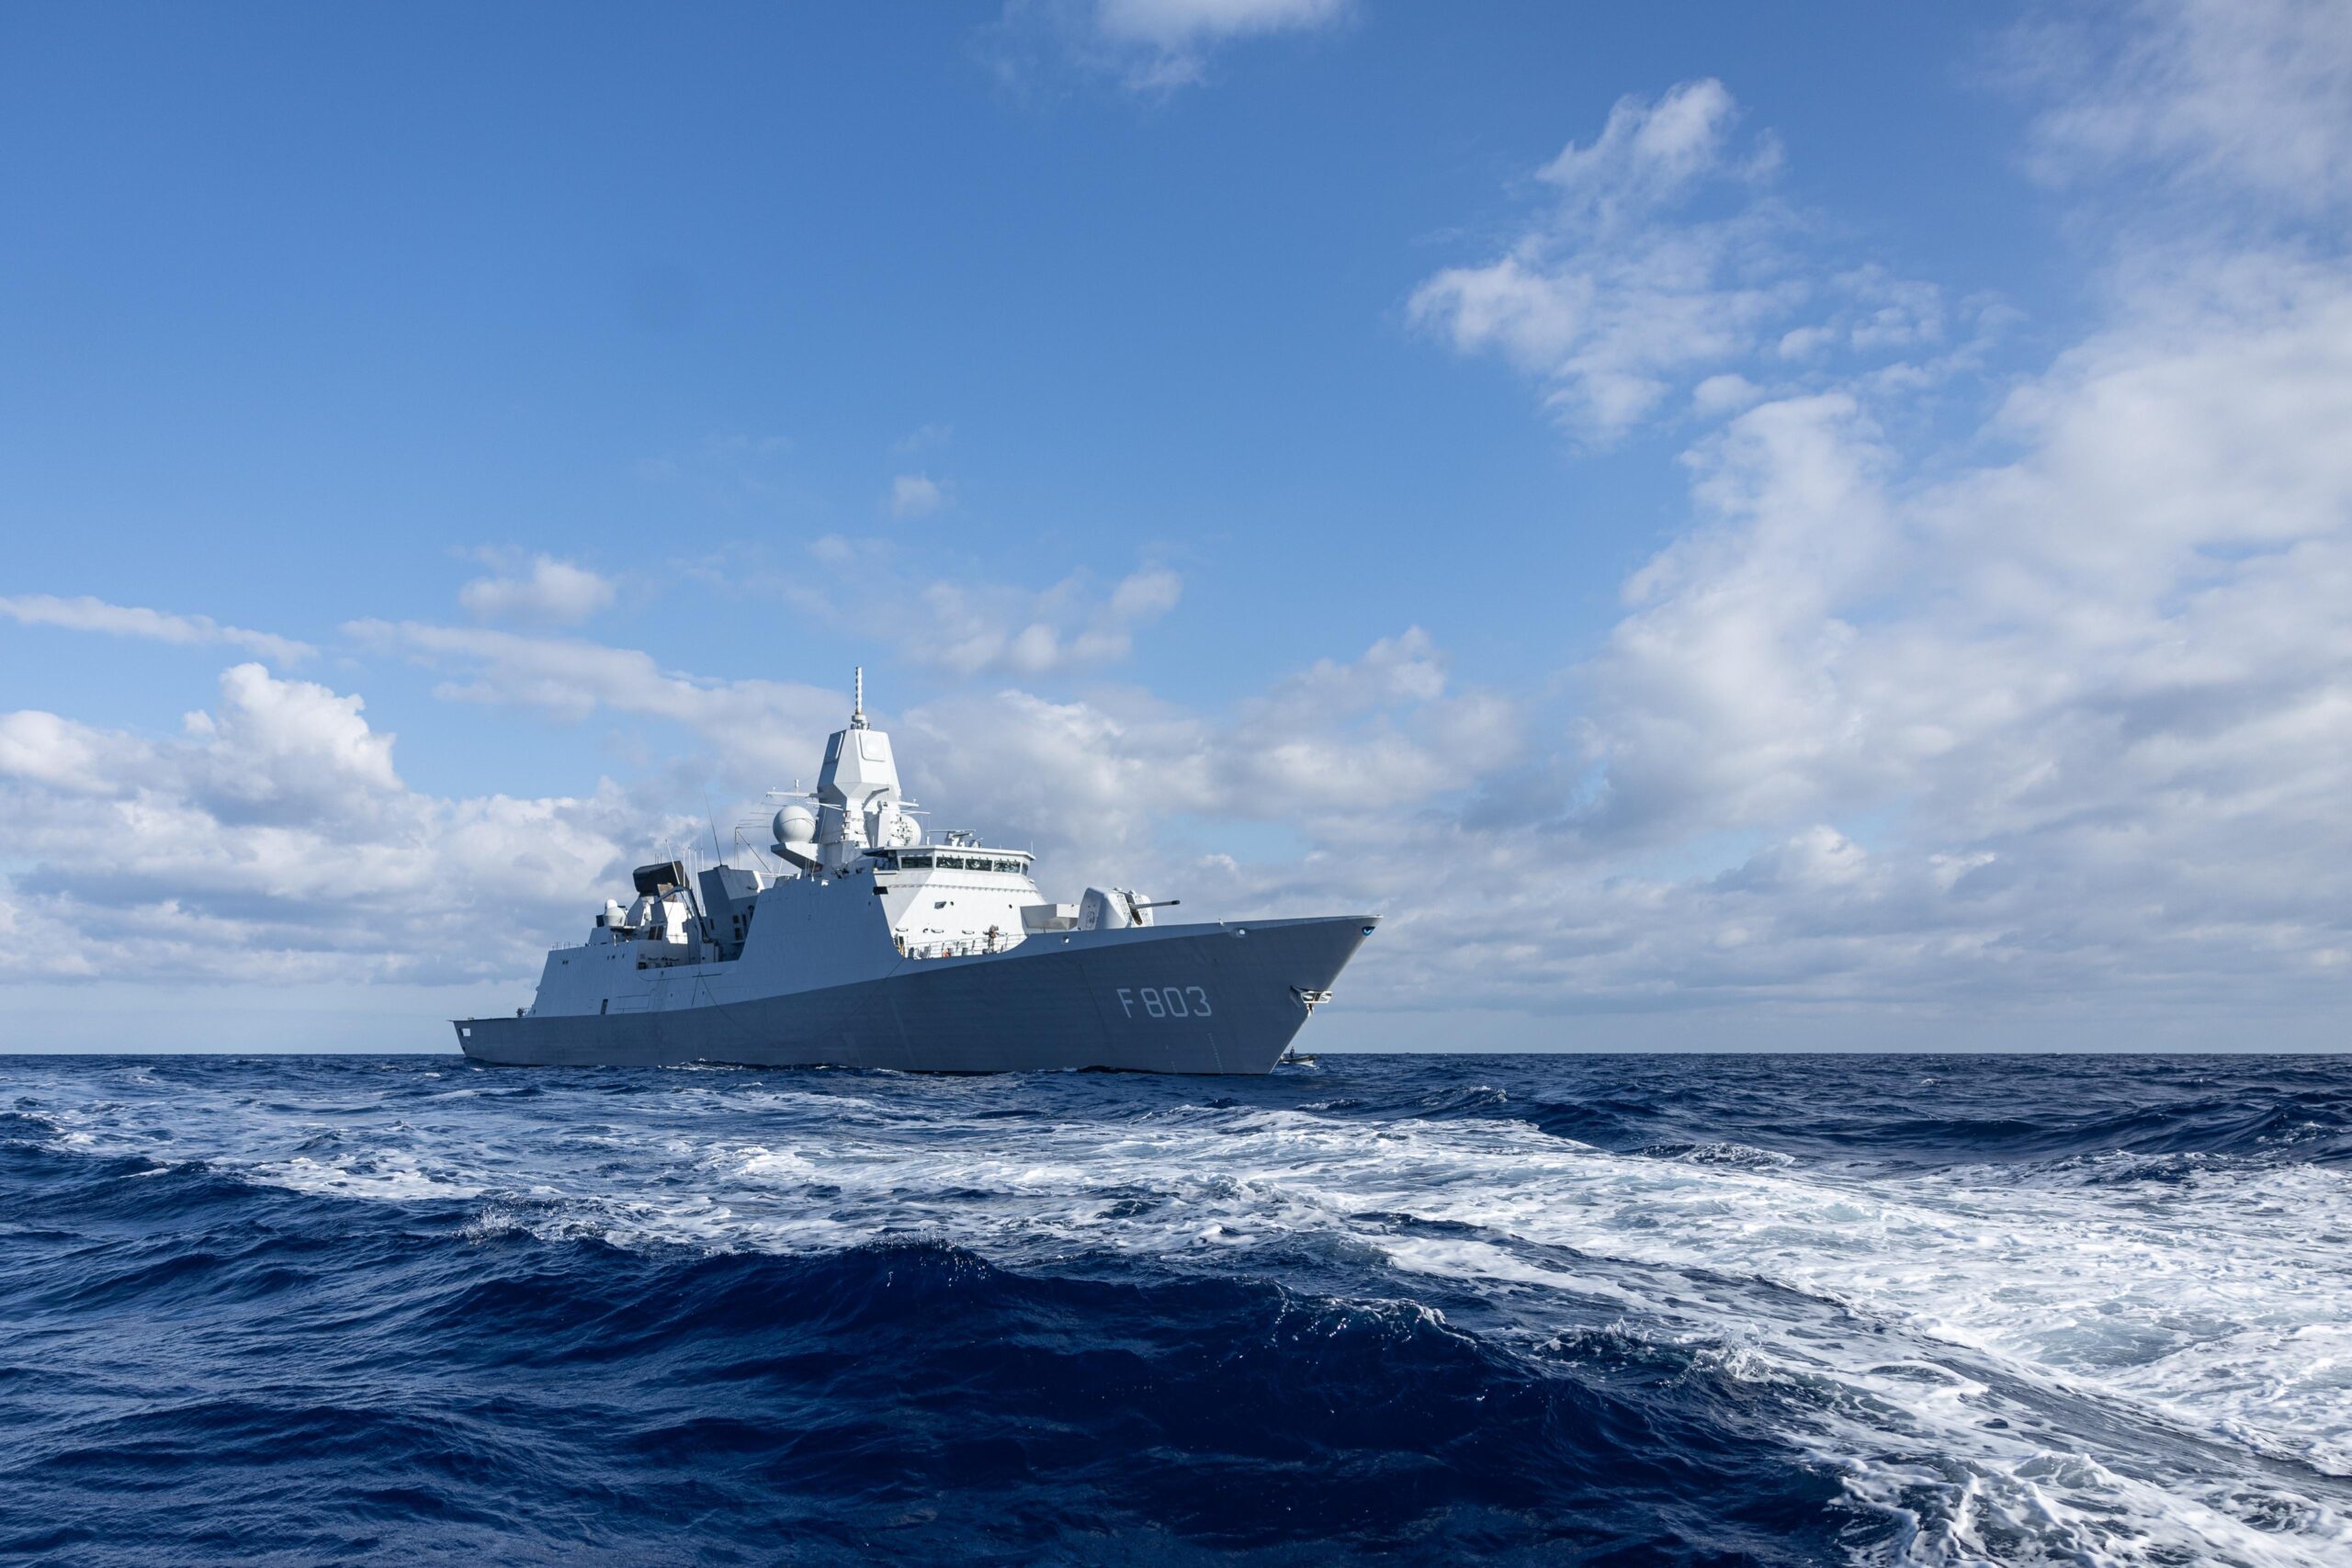 HNLMS Tromp frigate